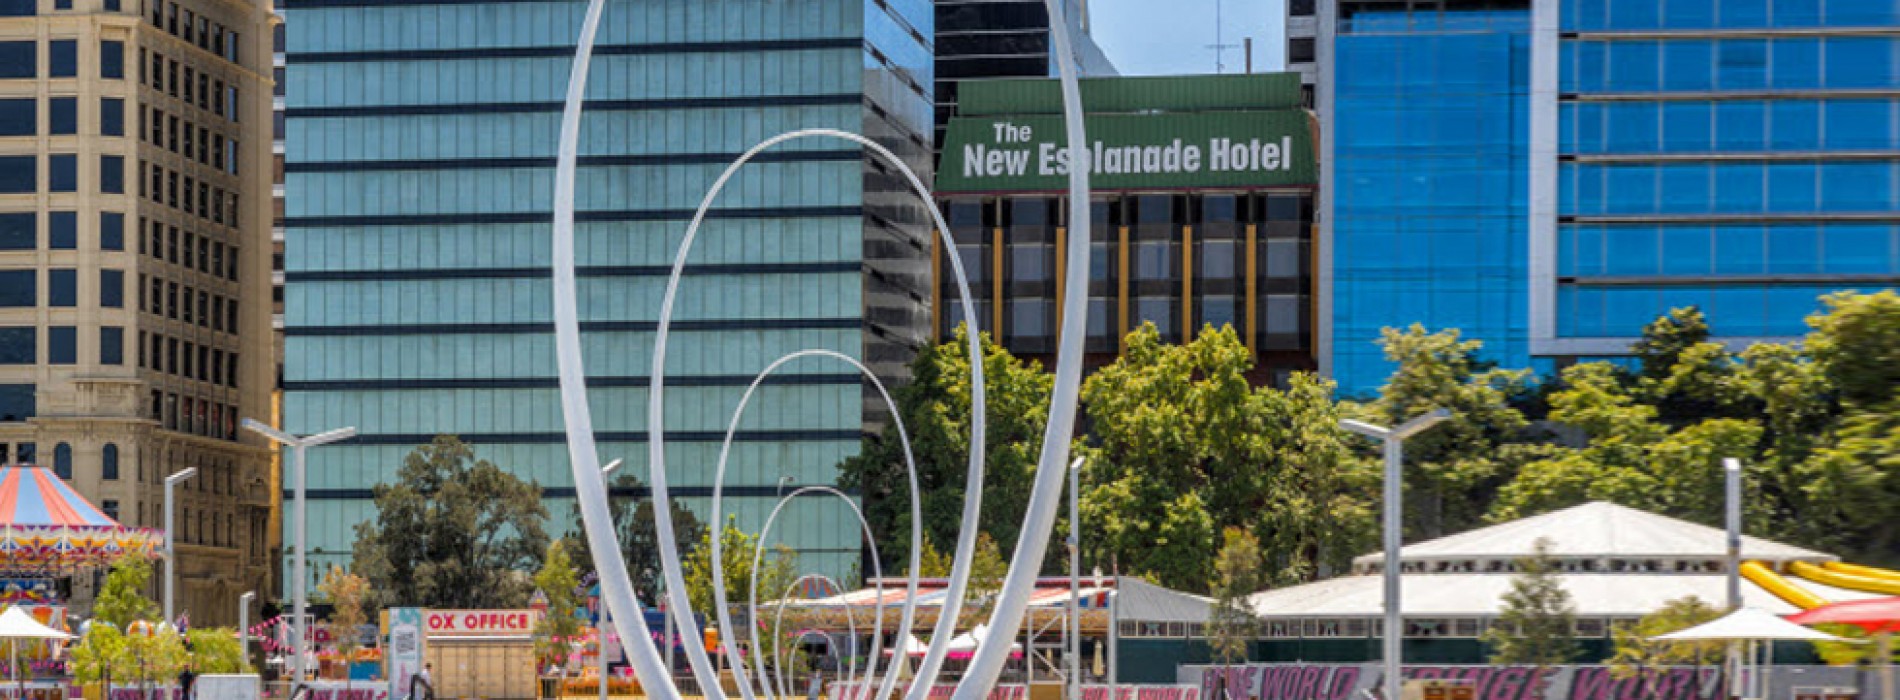 Australian hotel undergoes major renovation